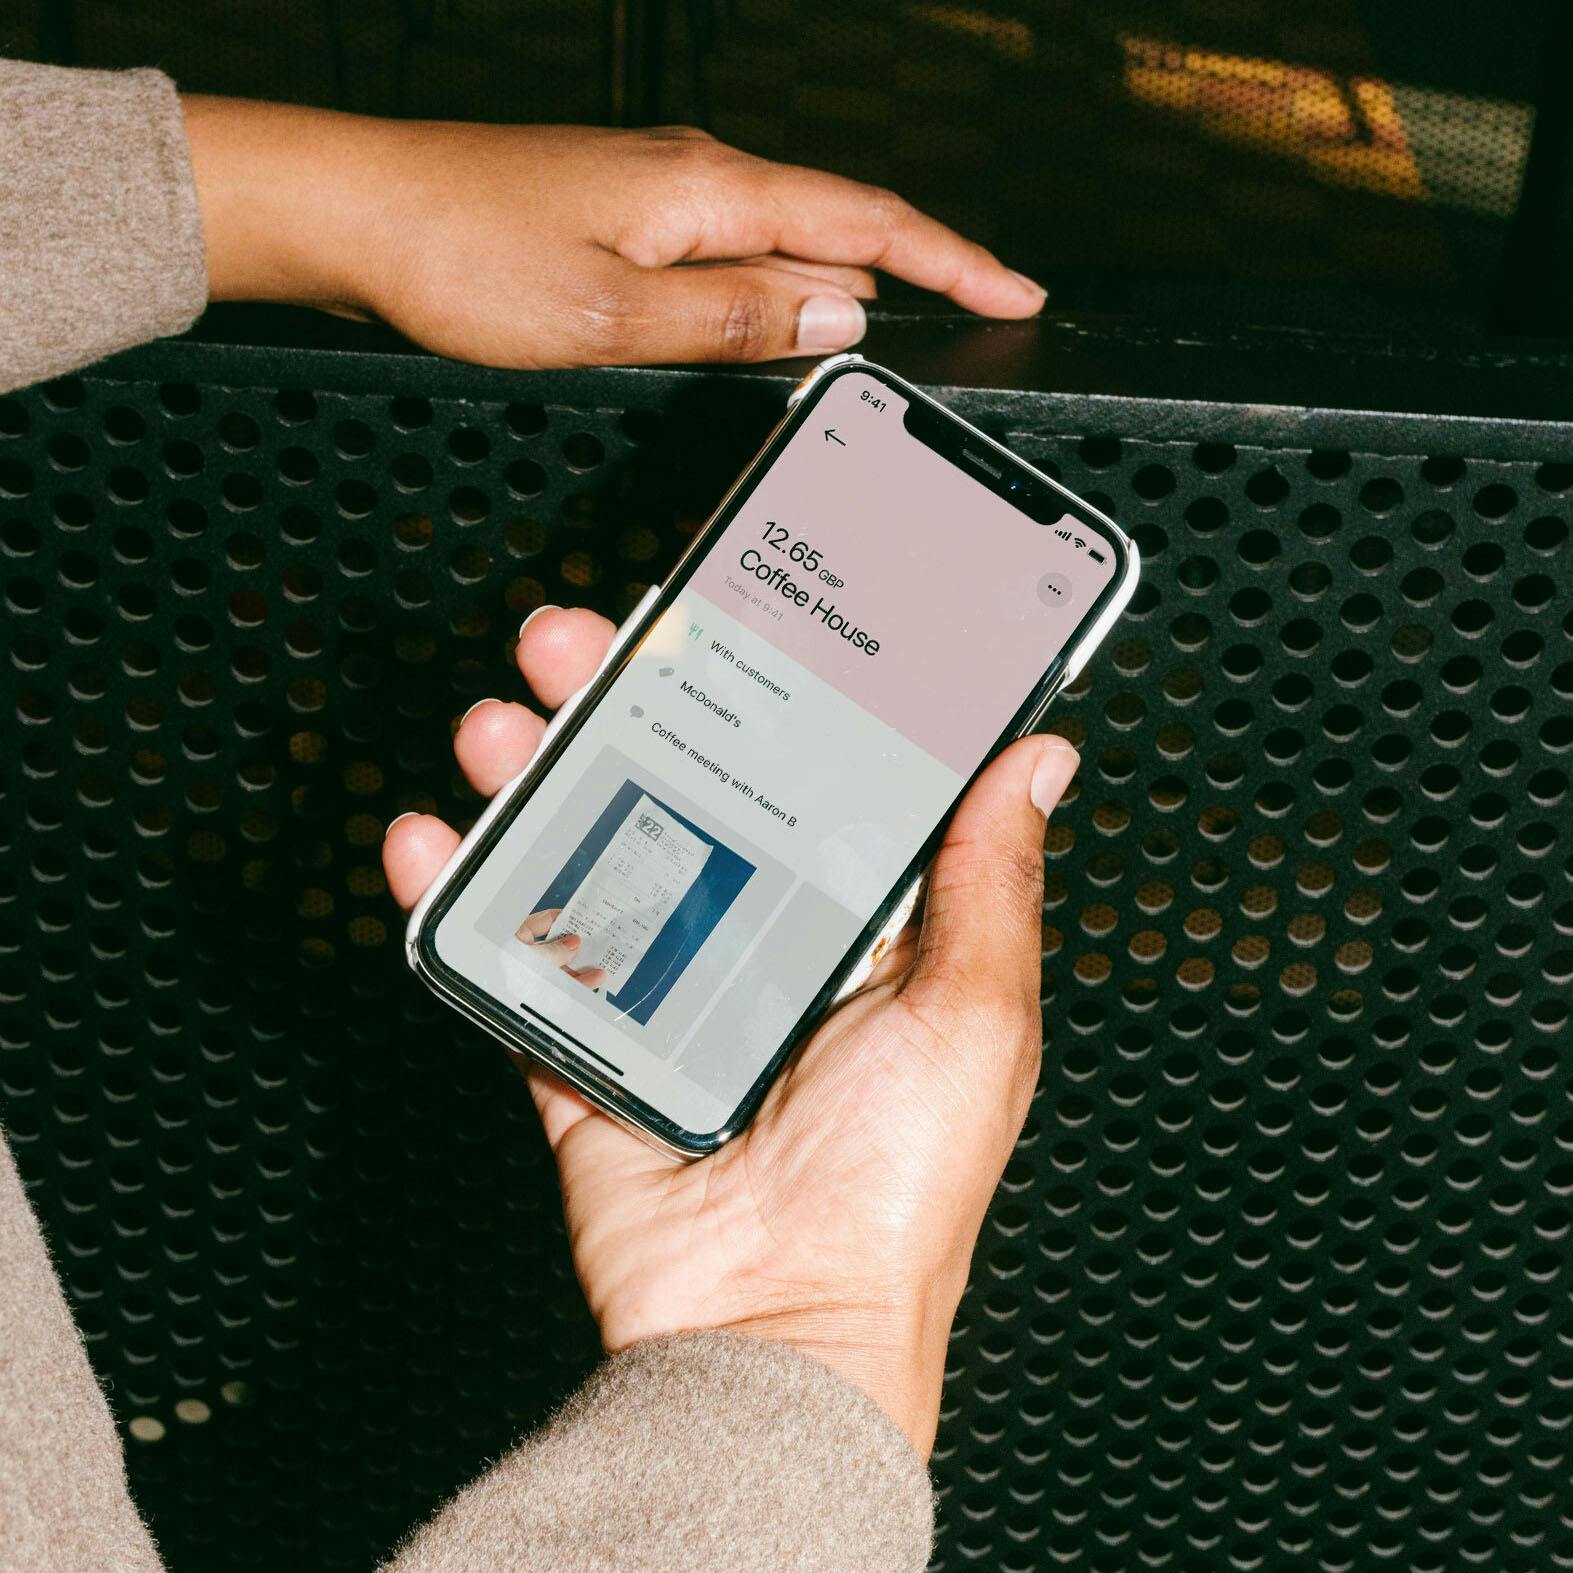 Employee holds a mobile phone with Pleo petty cash reimbursement app